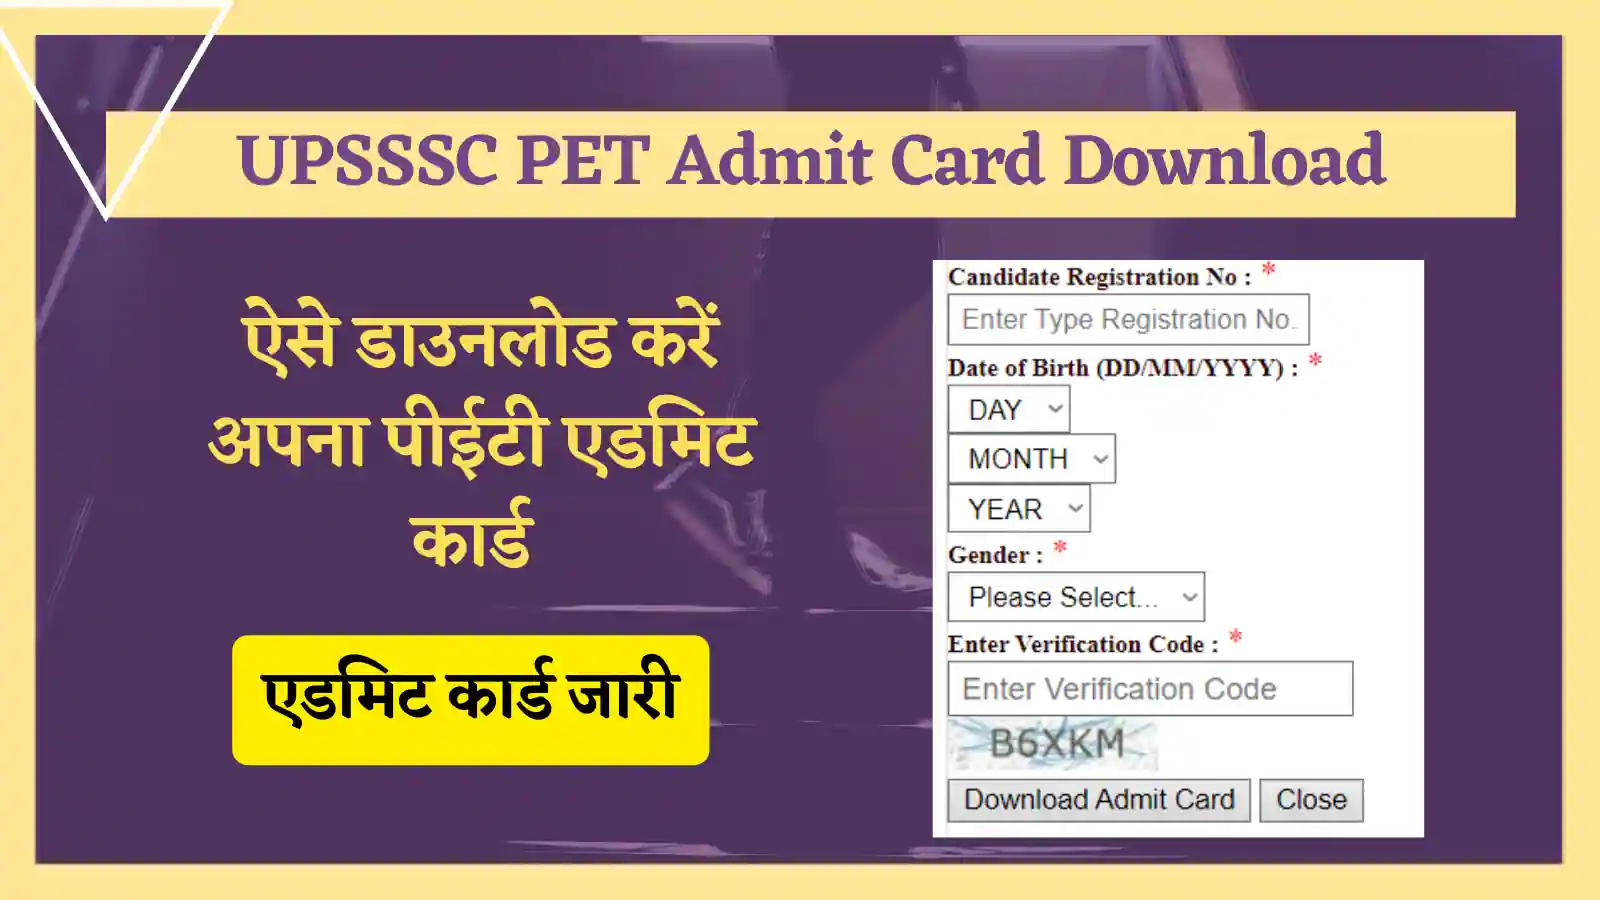 UPSSSC PET Admit Card Download